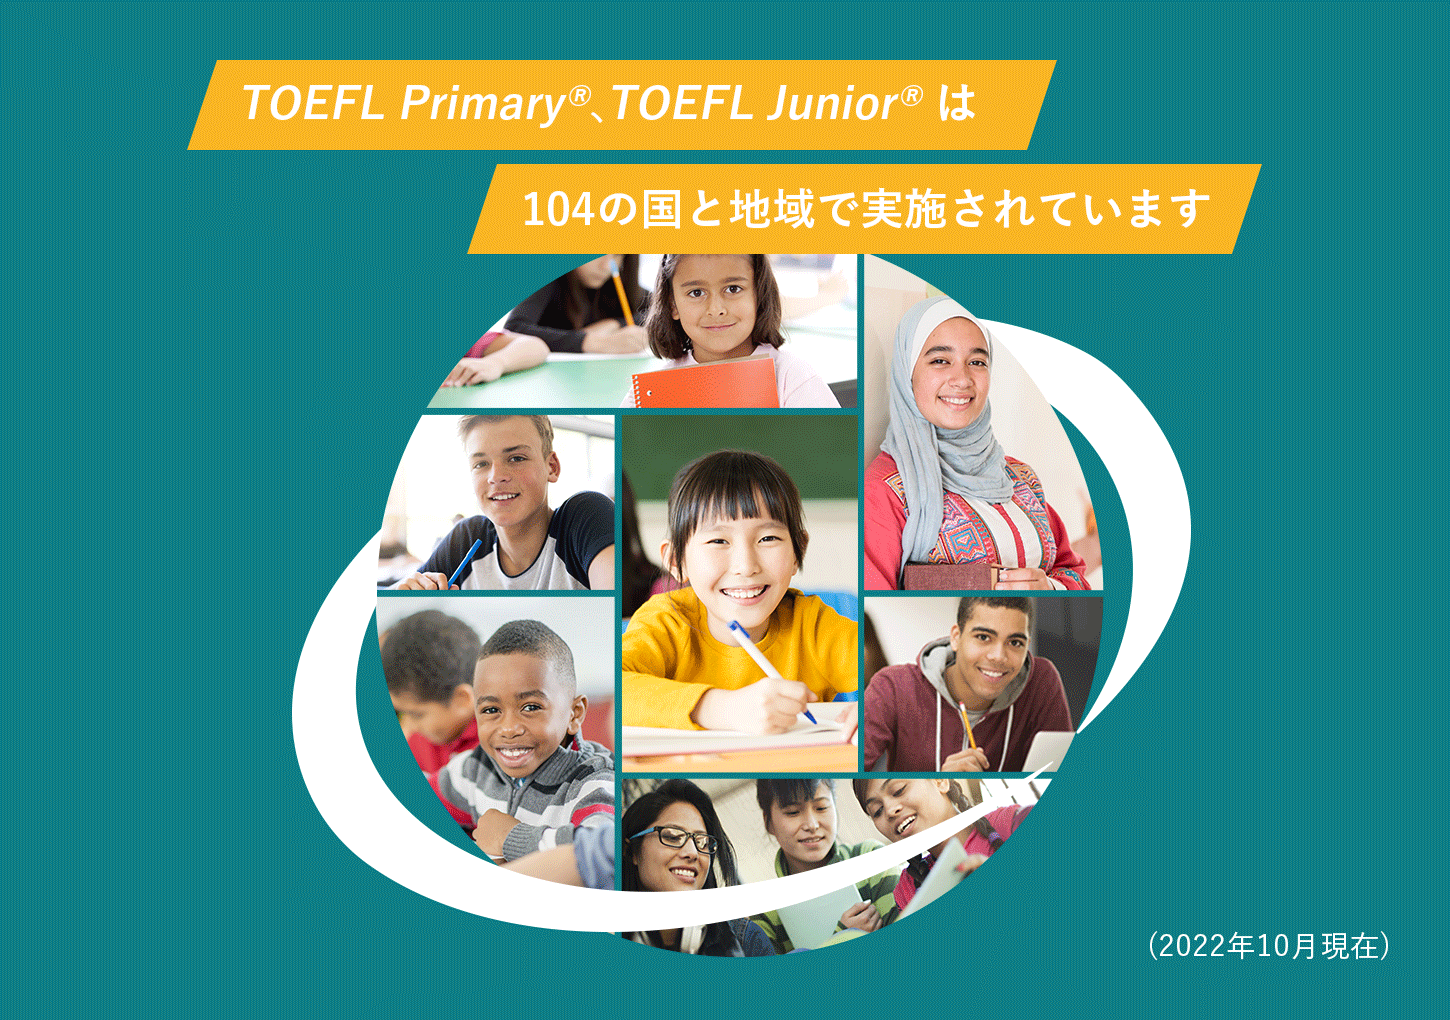 TOEFL Primary®、TOEFL Junior®は、104の国と地域で実施されています